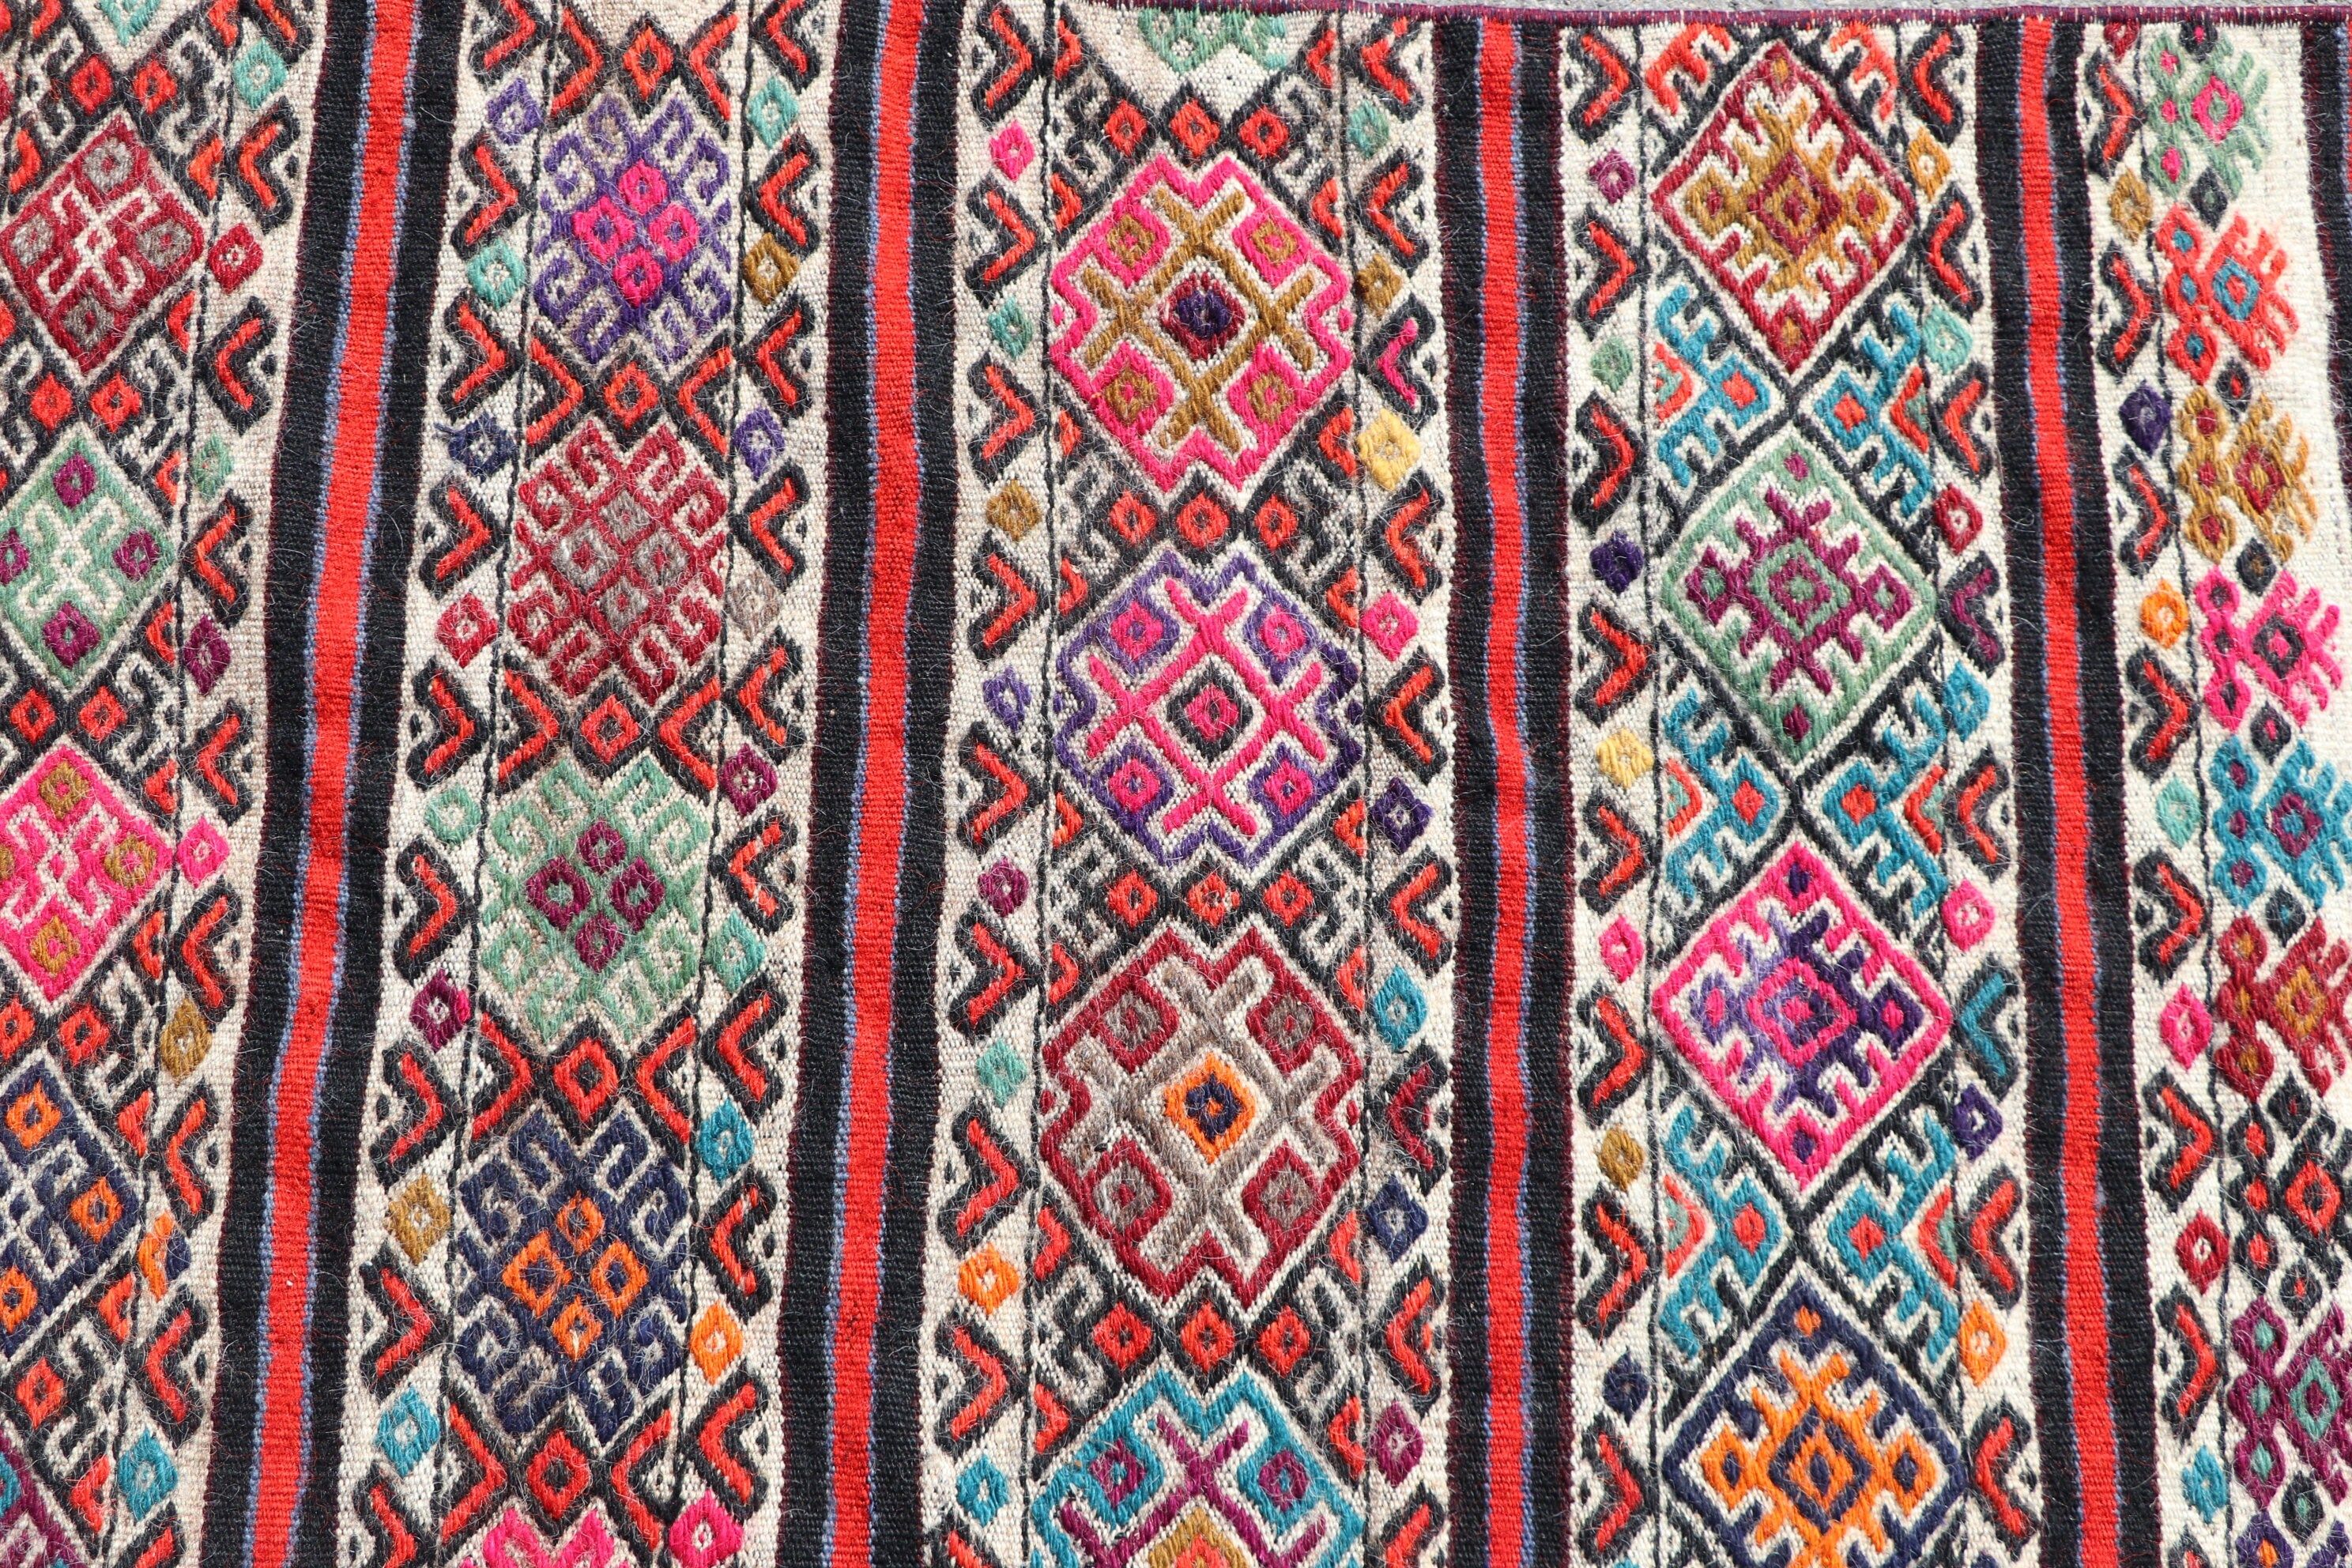 Wall Hanging Rug, Vintage Rugs, Turkish Rug, Kilim, Bedroom Rug, Car Mat Rugs, Moroccan Rug, Pink Moroccan Rug, 2.1x5.2 ft Small Rug